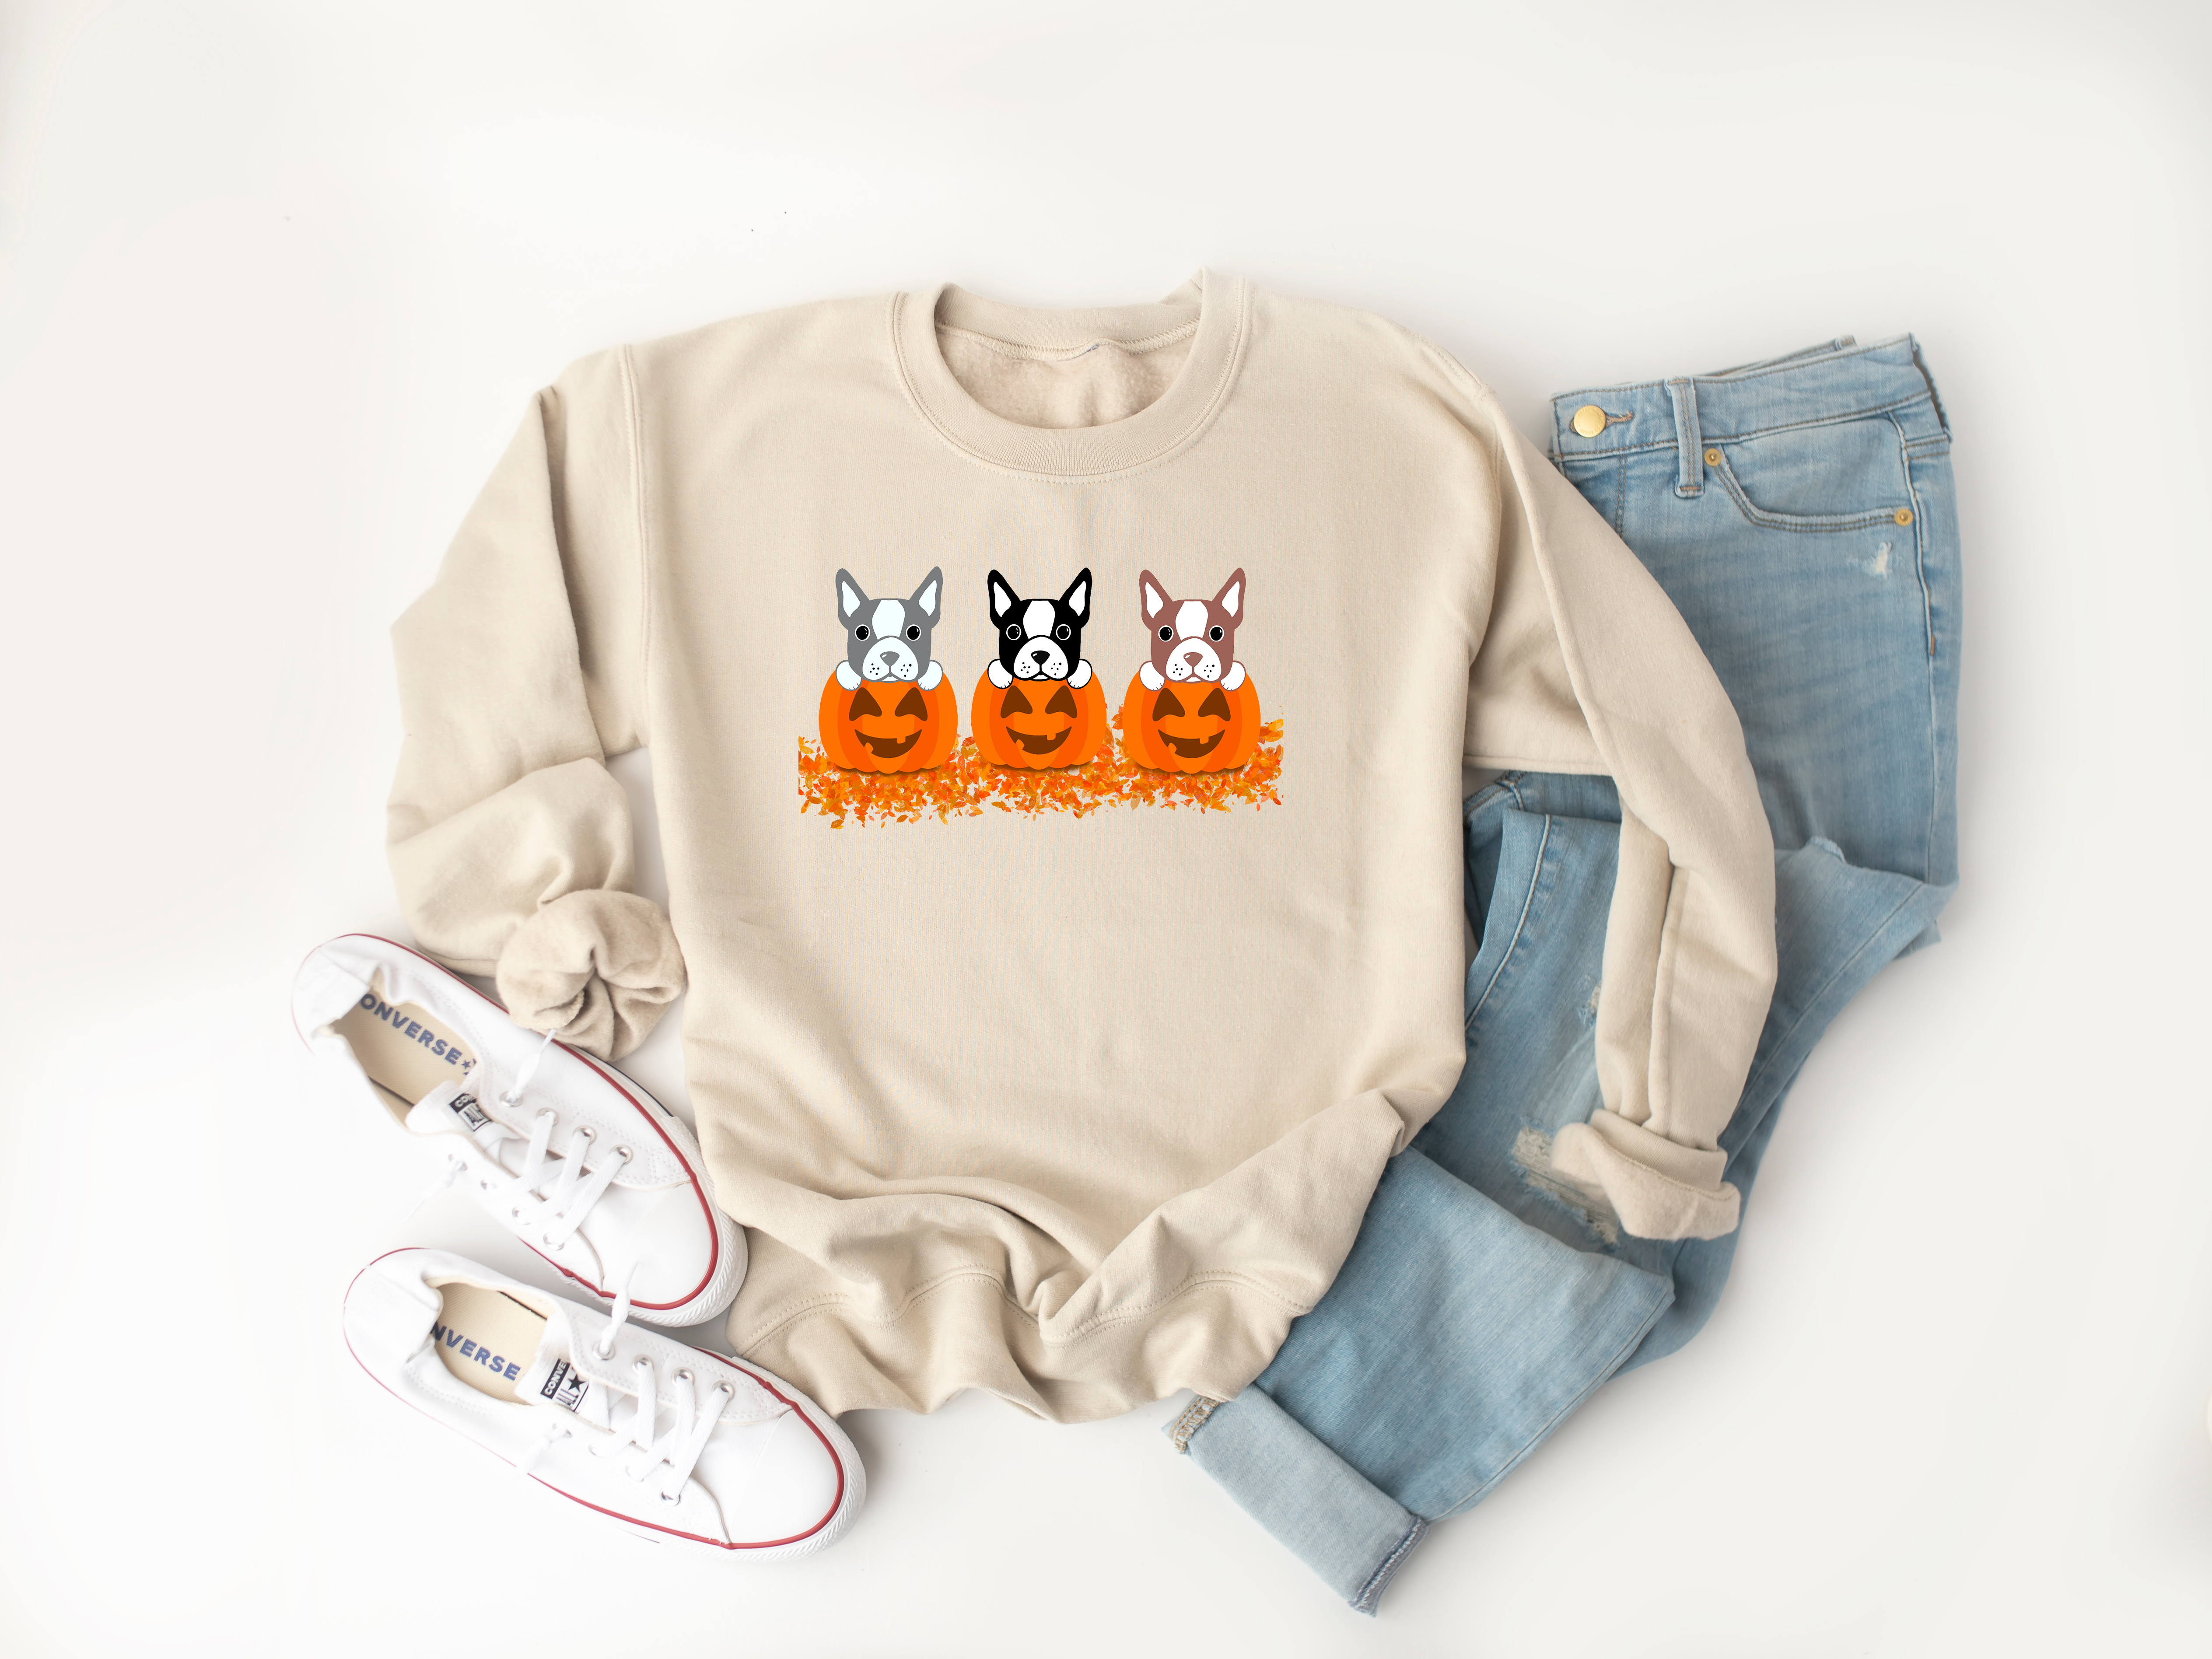 Boston Pumpkins Crewneck Sweatshirt